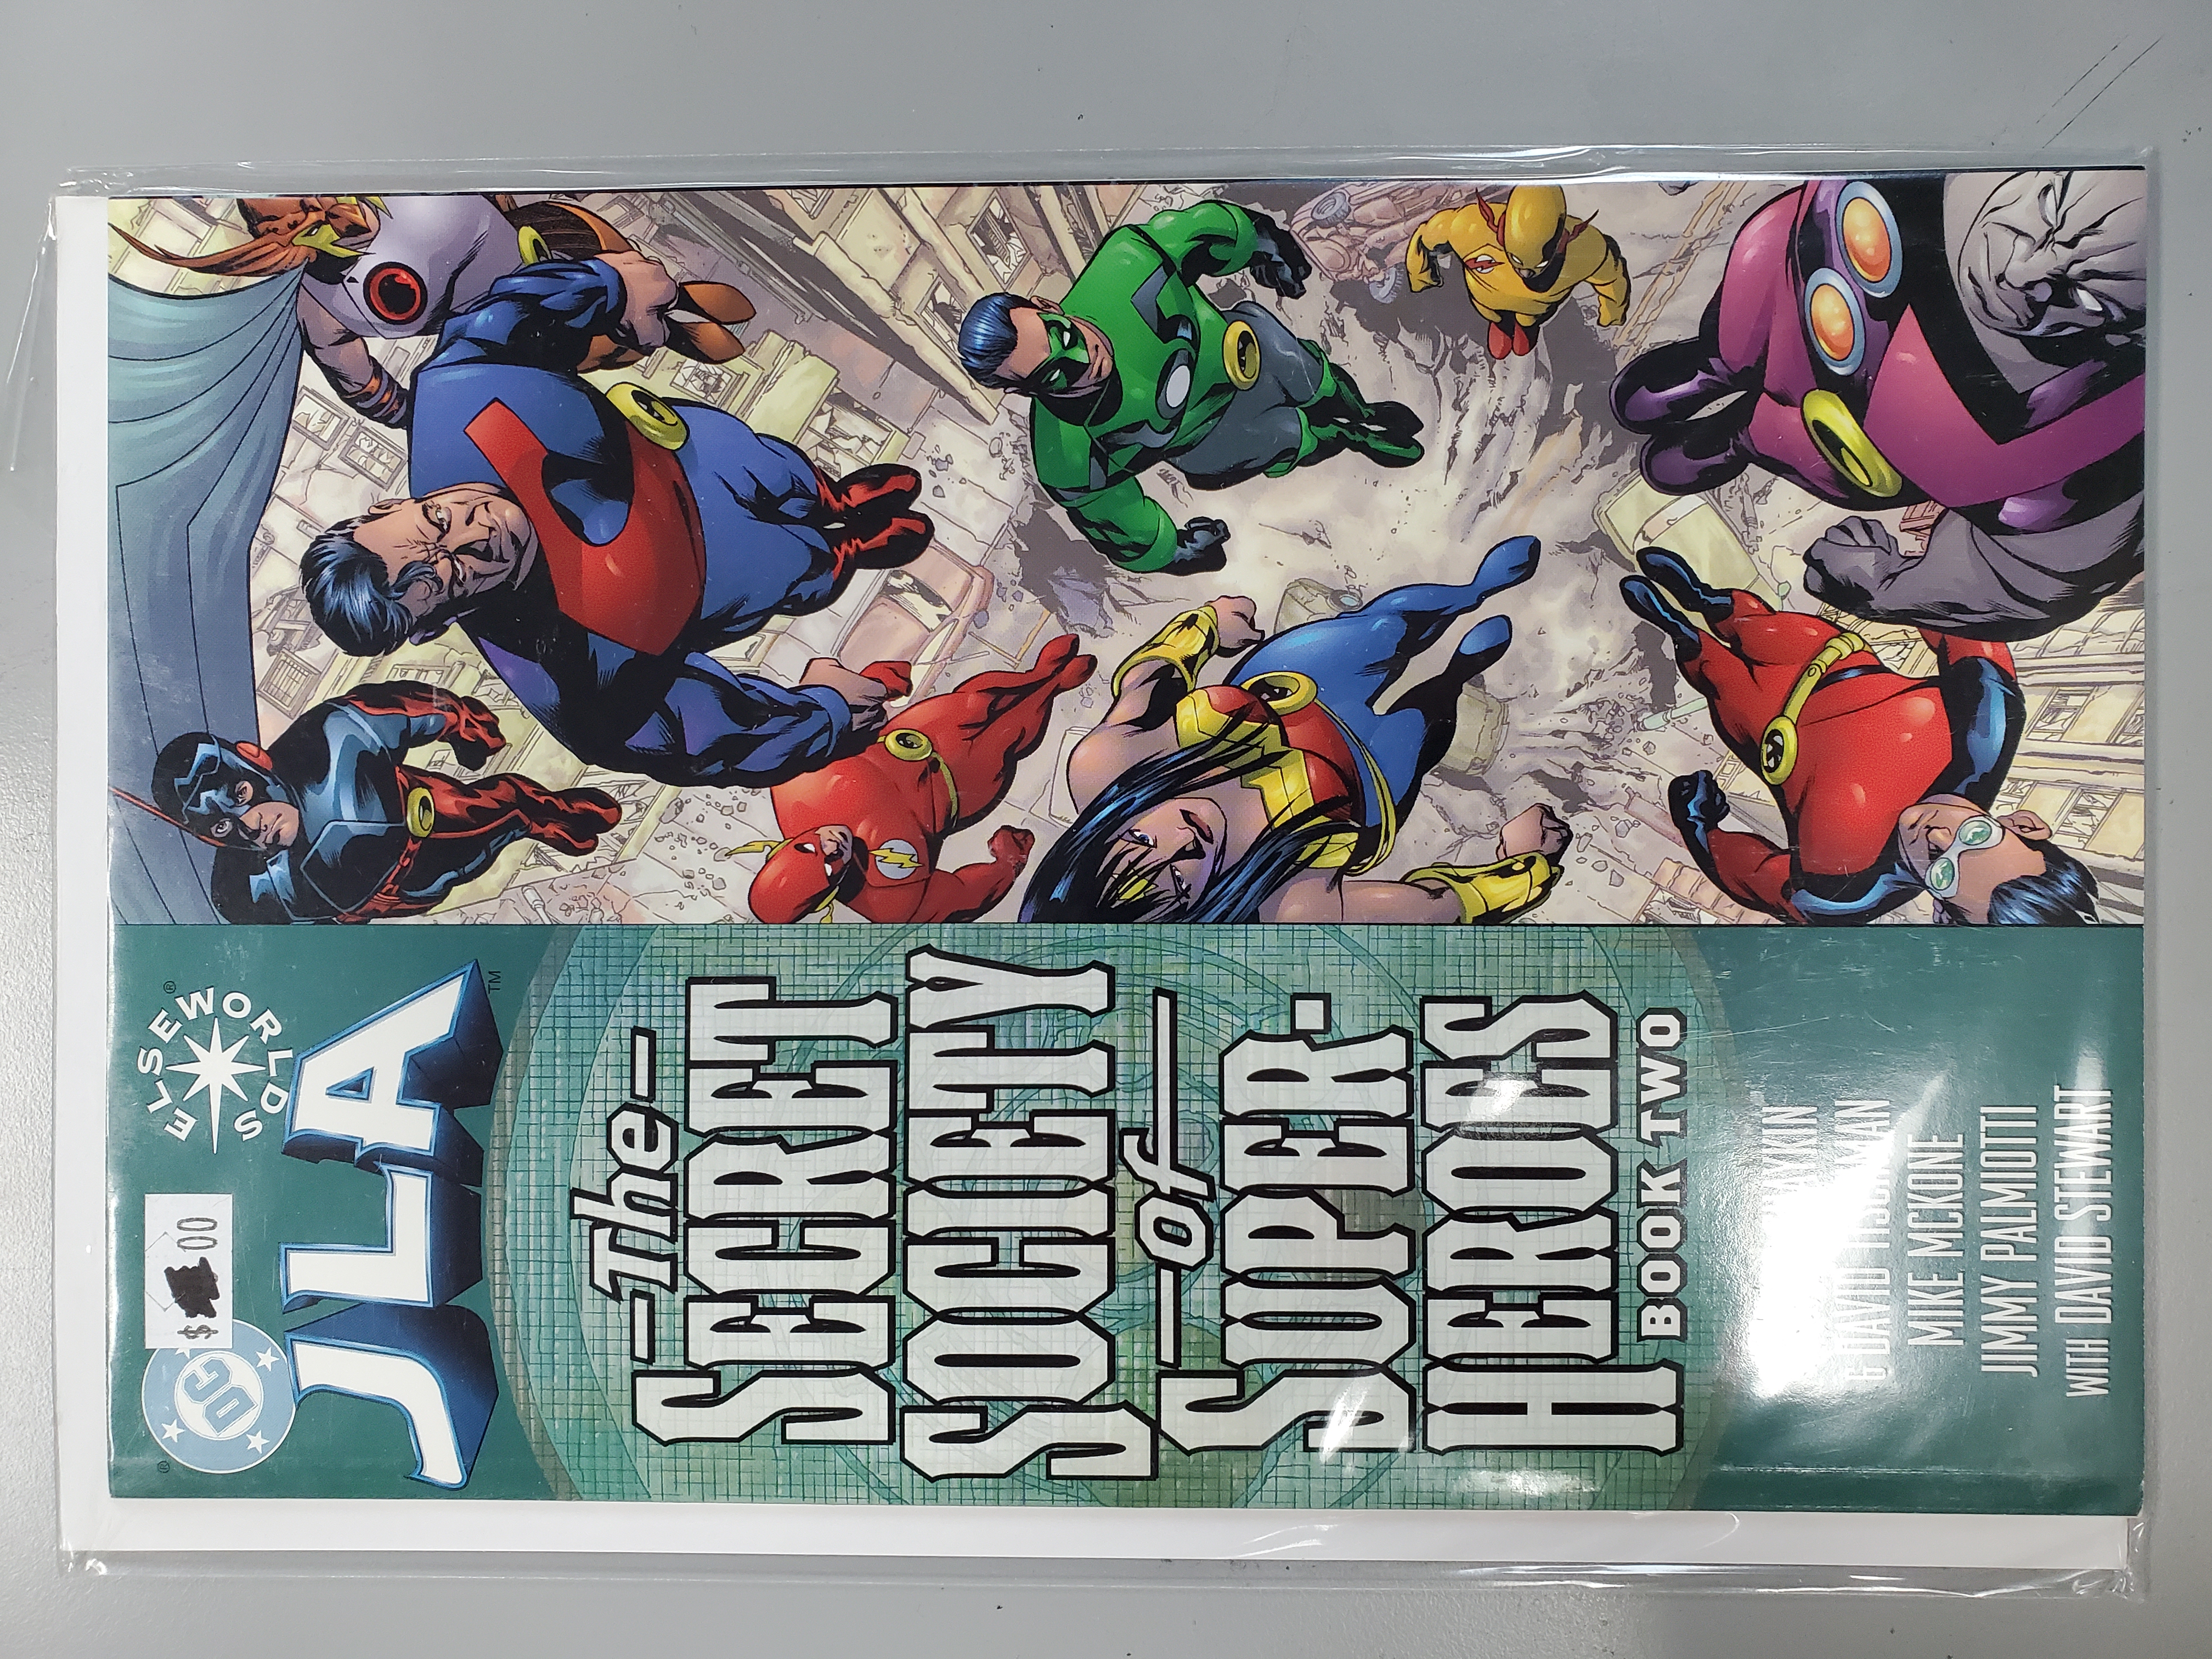 JLA Secret Society of Super-Heroes #1-2 (DC 2000) Set